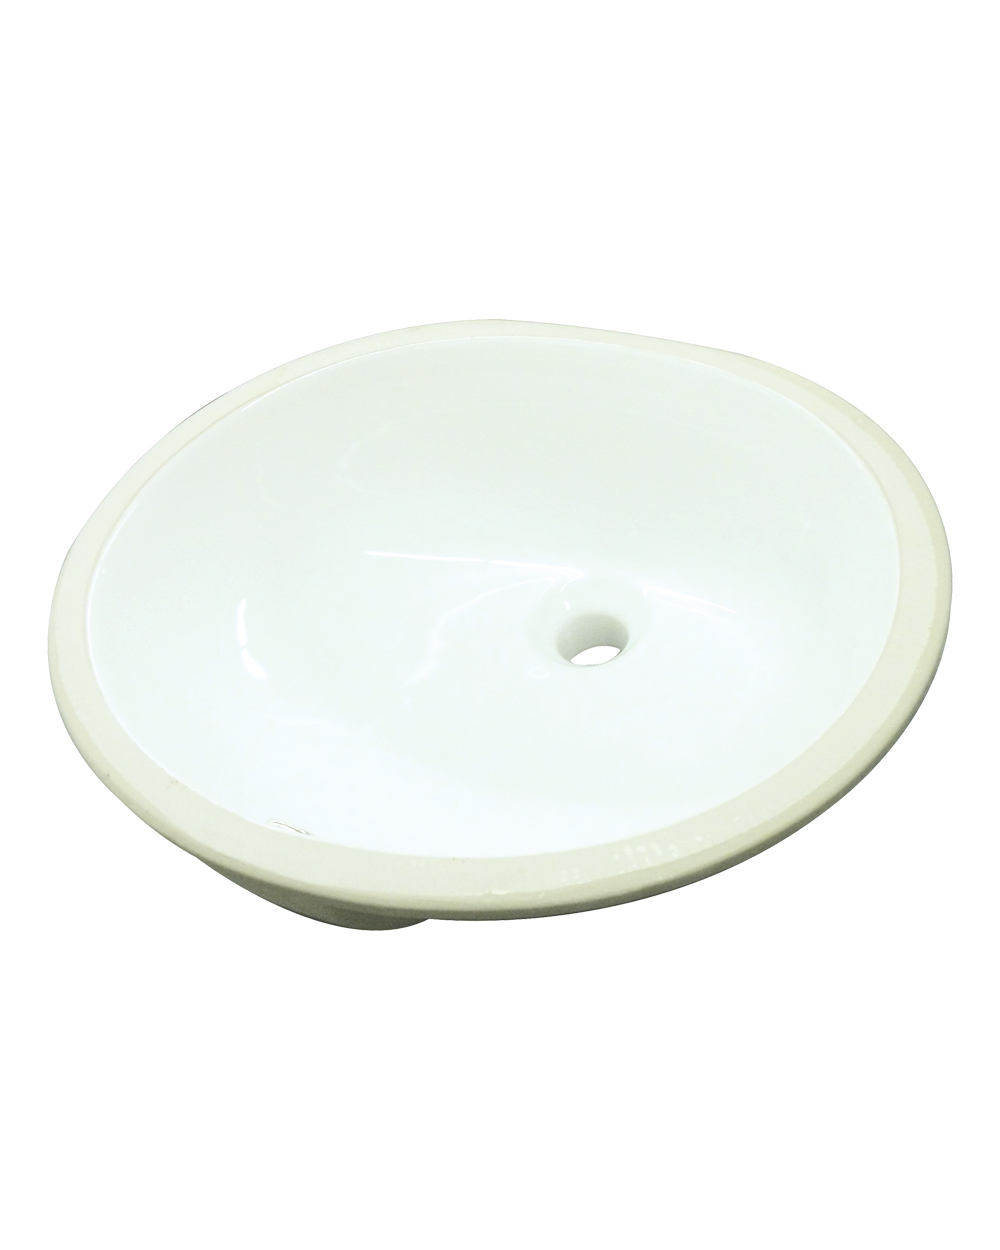 Madison Grande 19x15-7/8x8" Single Bowl Bath Sink in White